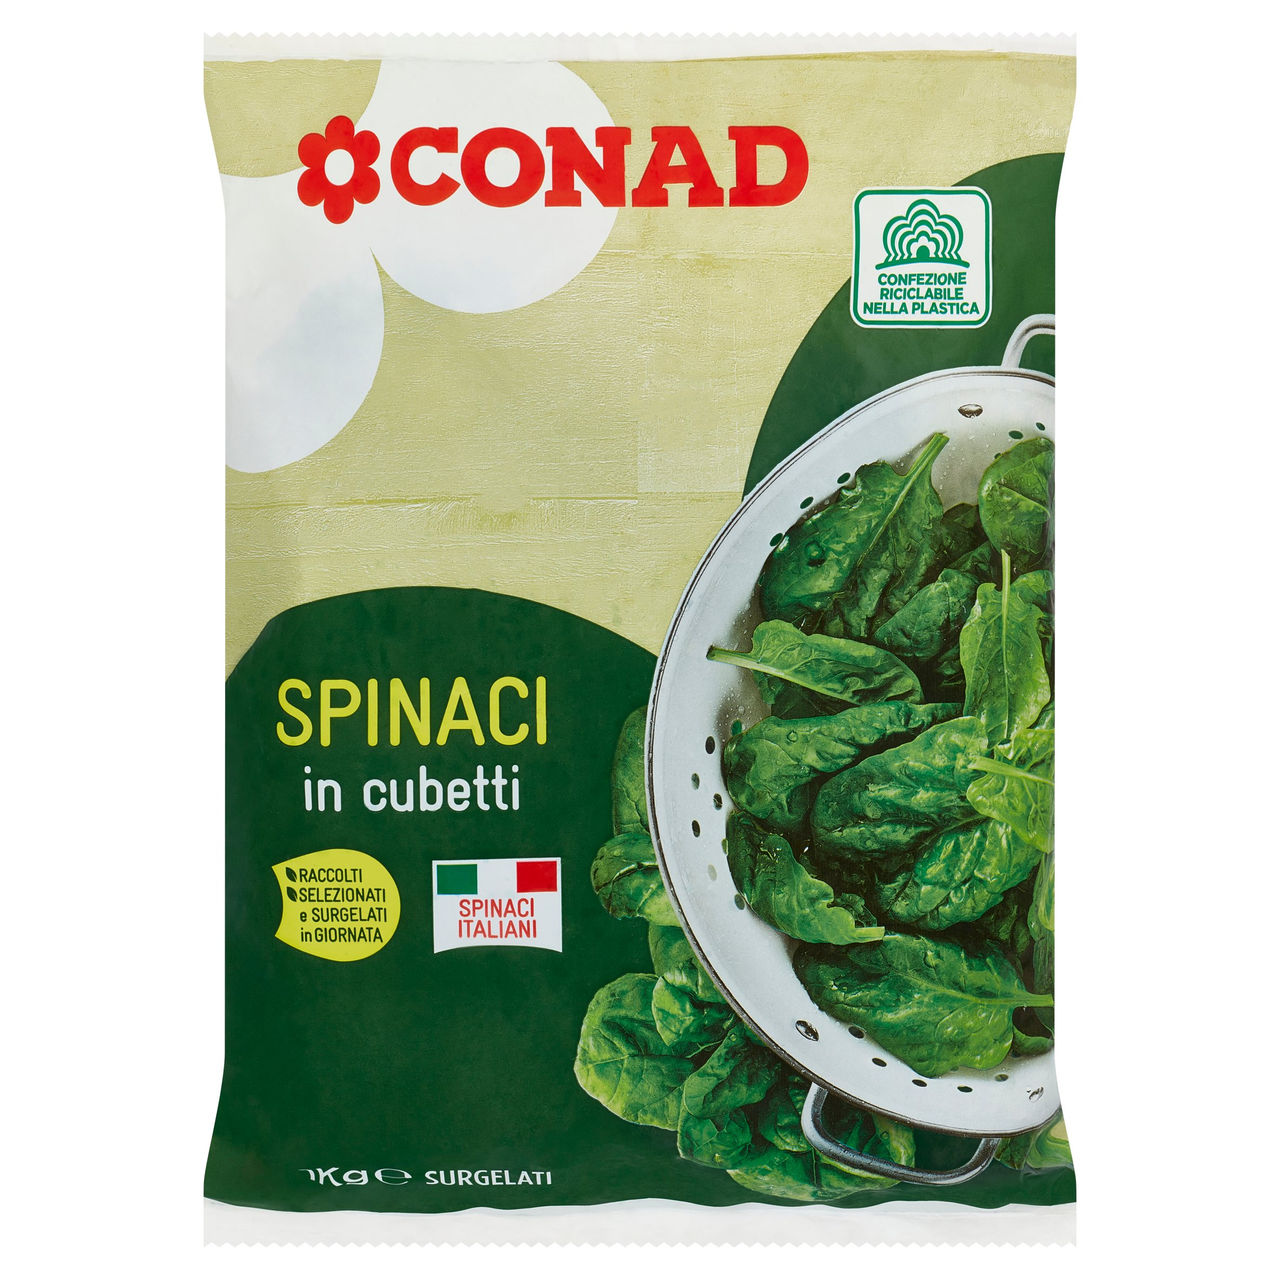 Spinaci in cubetti Surgelati 1 kg Conad online